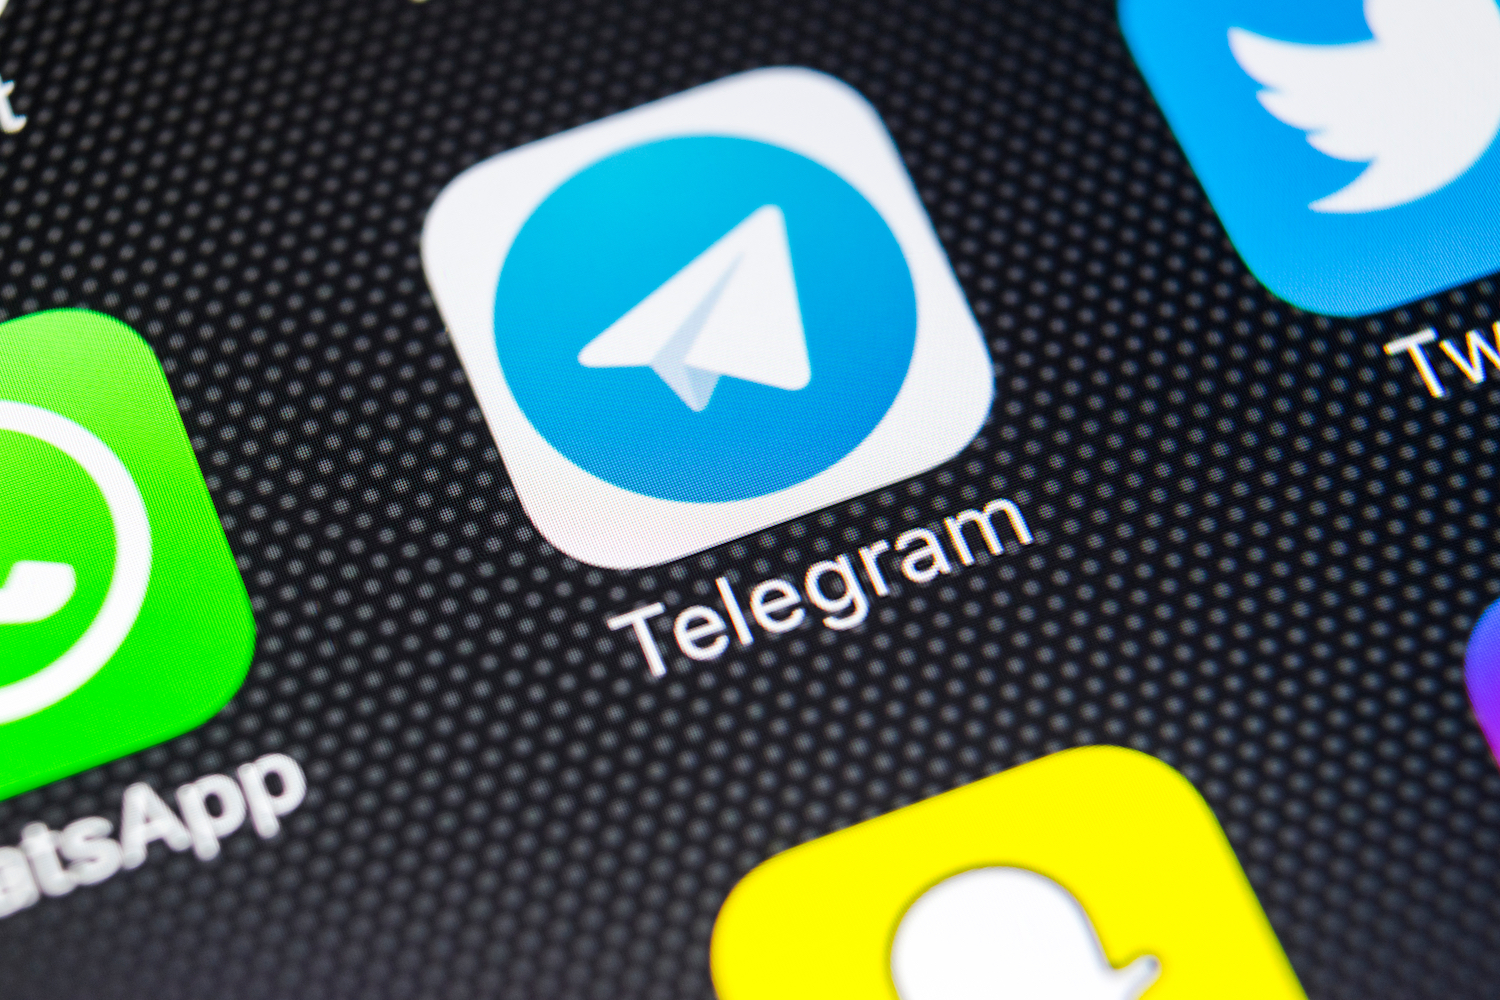 Telegram Refutes All SEC Allegations, Asks Court To Dismiss In New Filing